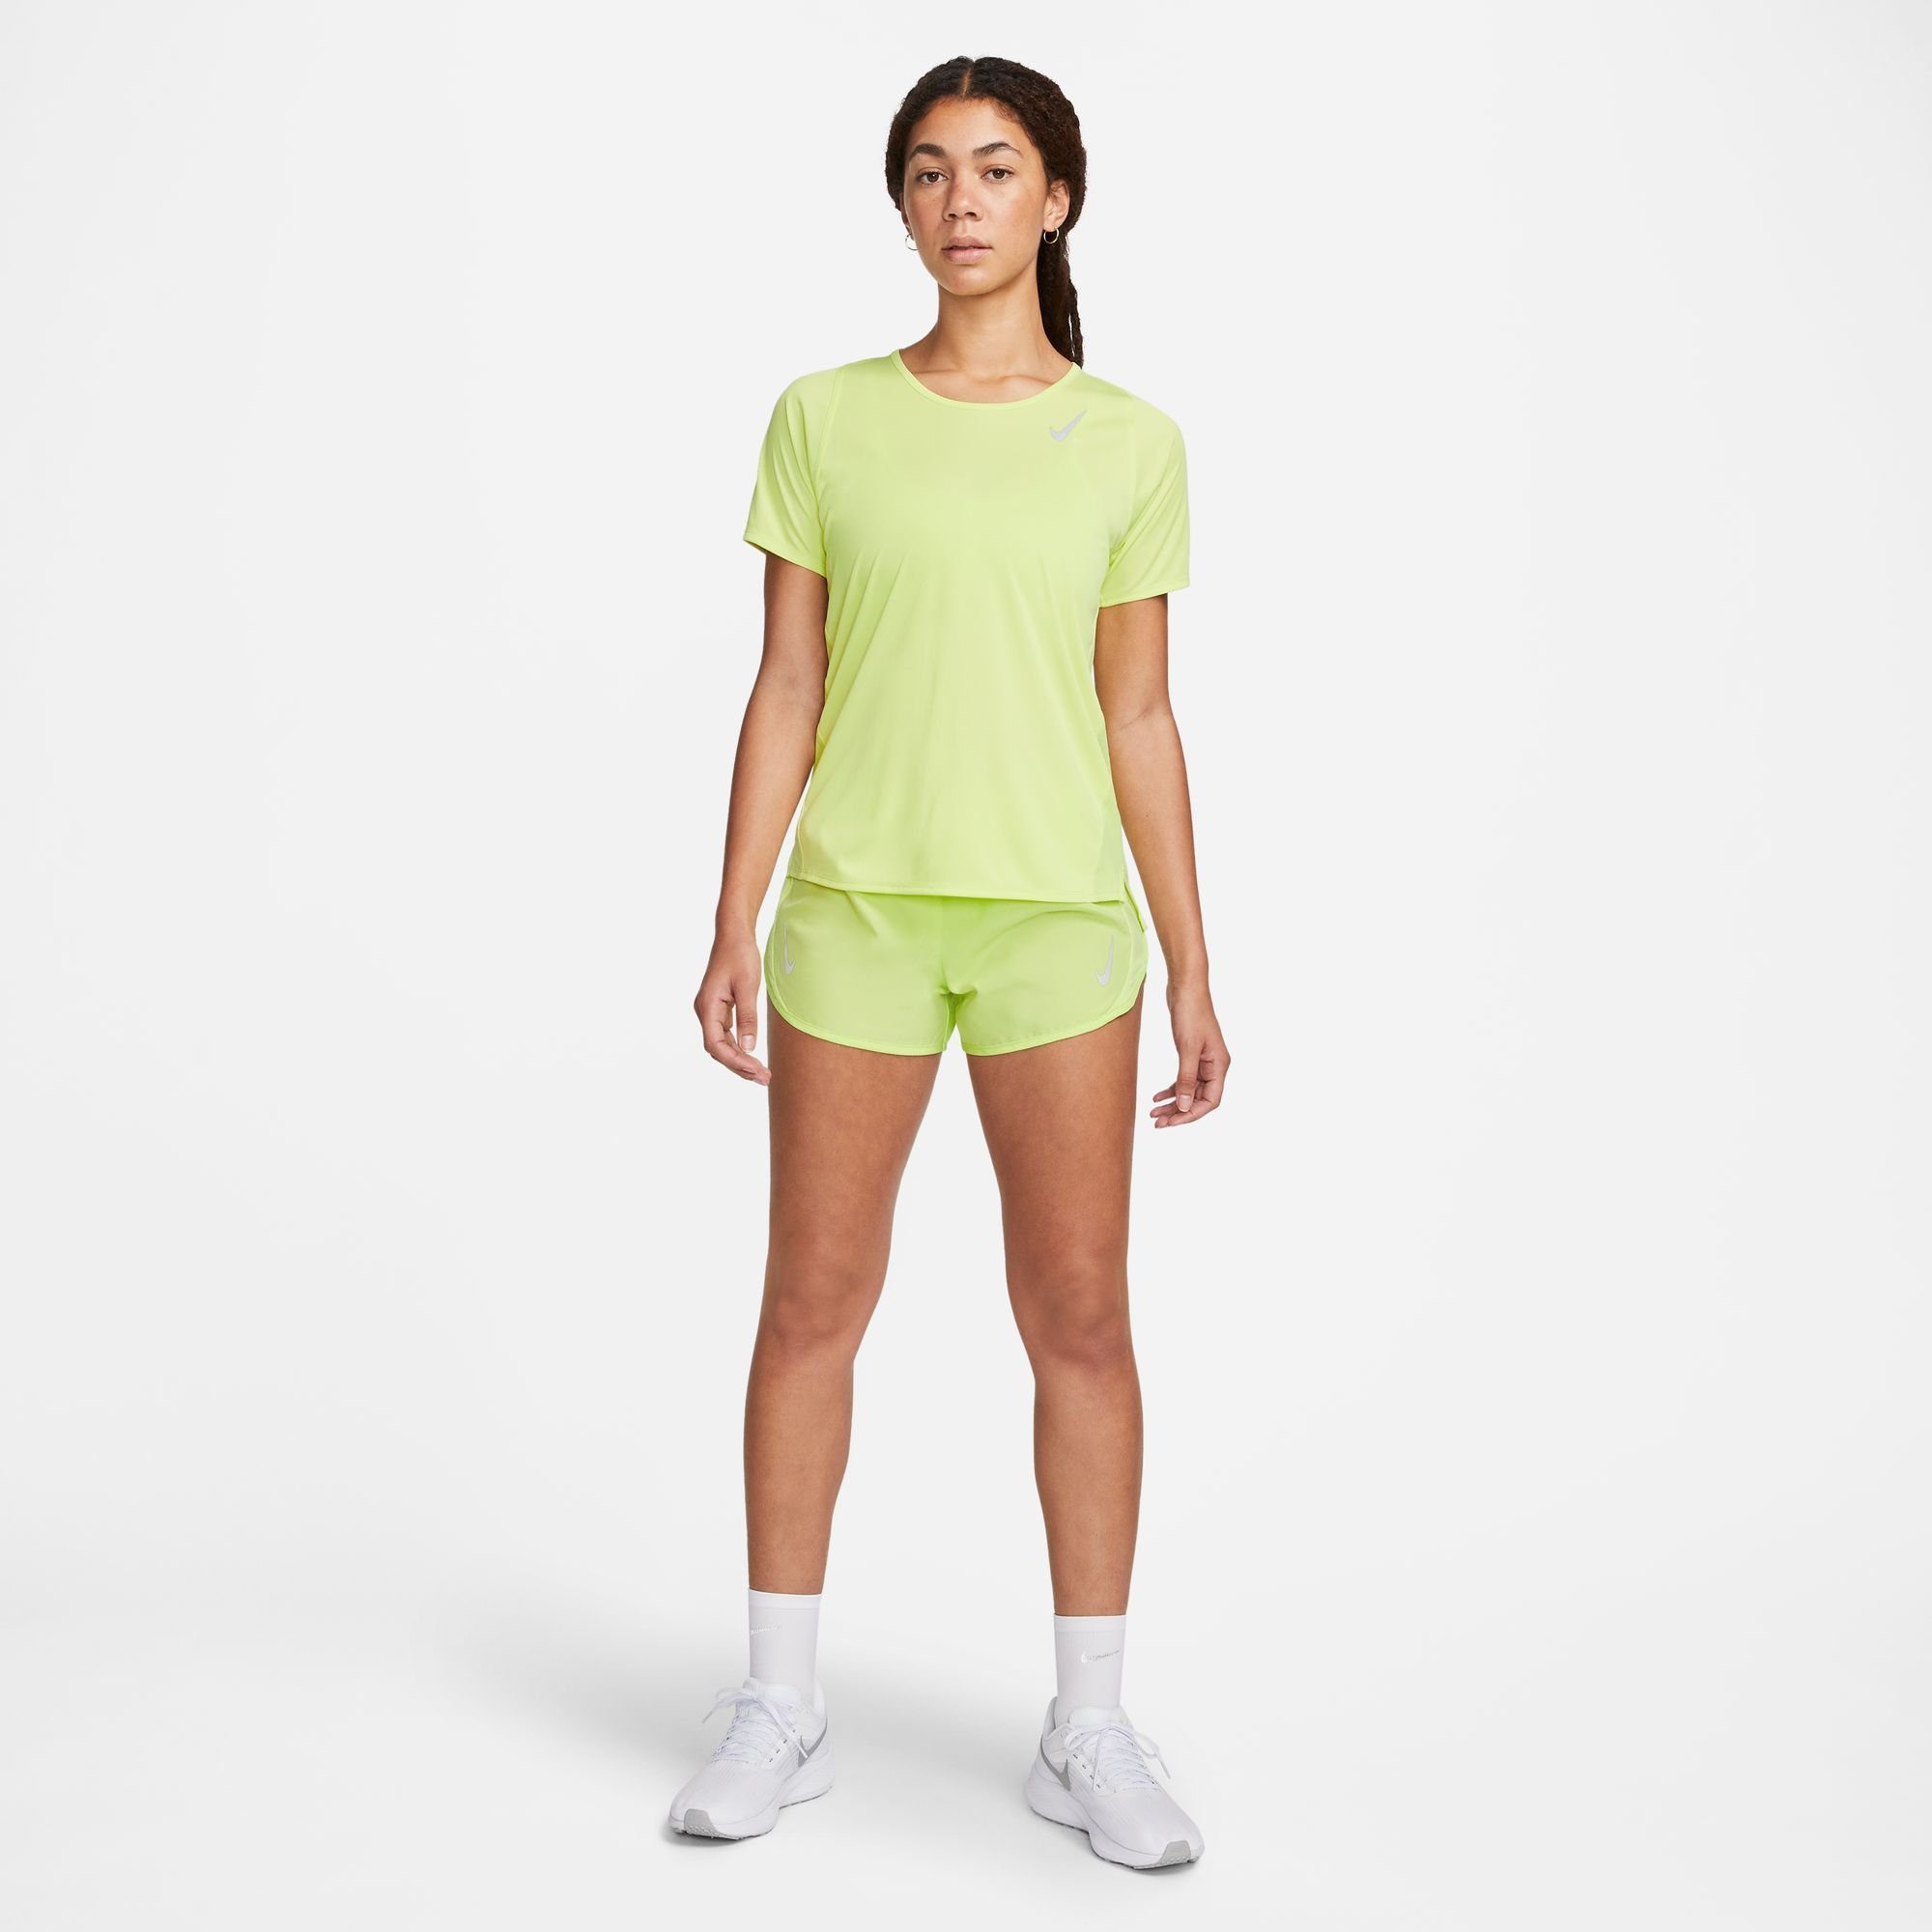 WOMEN'S RACE TWIST/REFLECTIVE LEMON LT Laufshirt TOP Nike SILV DRI-FIT SHORT-SLEEVE RUNNING